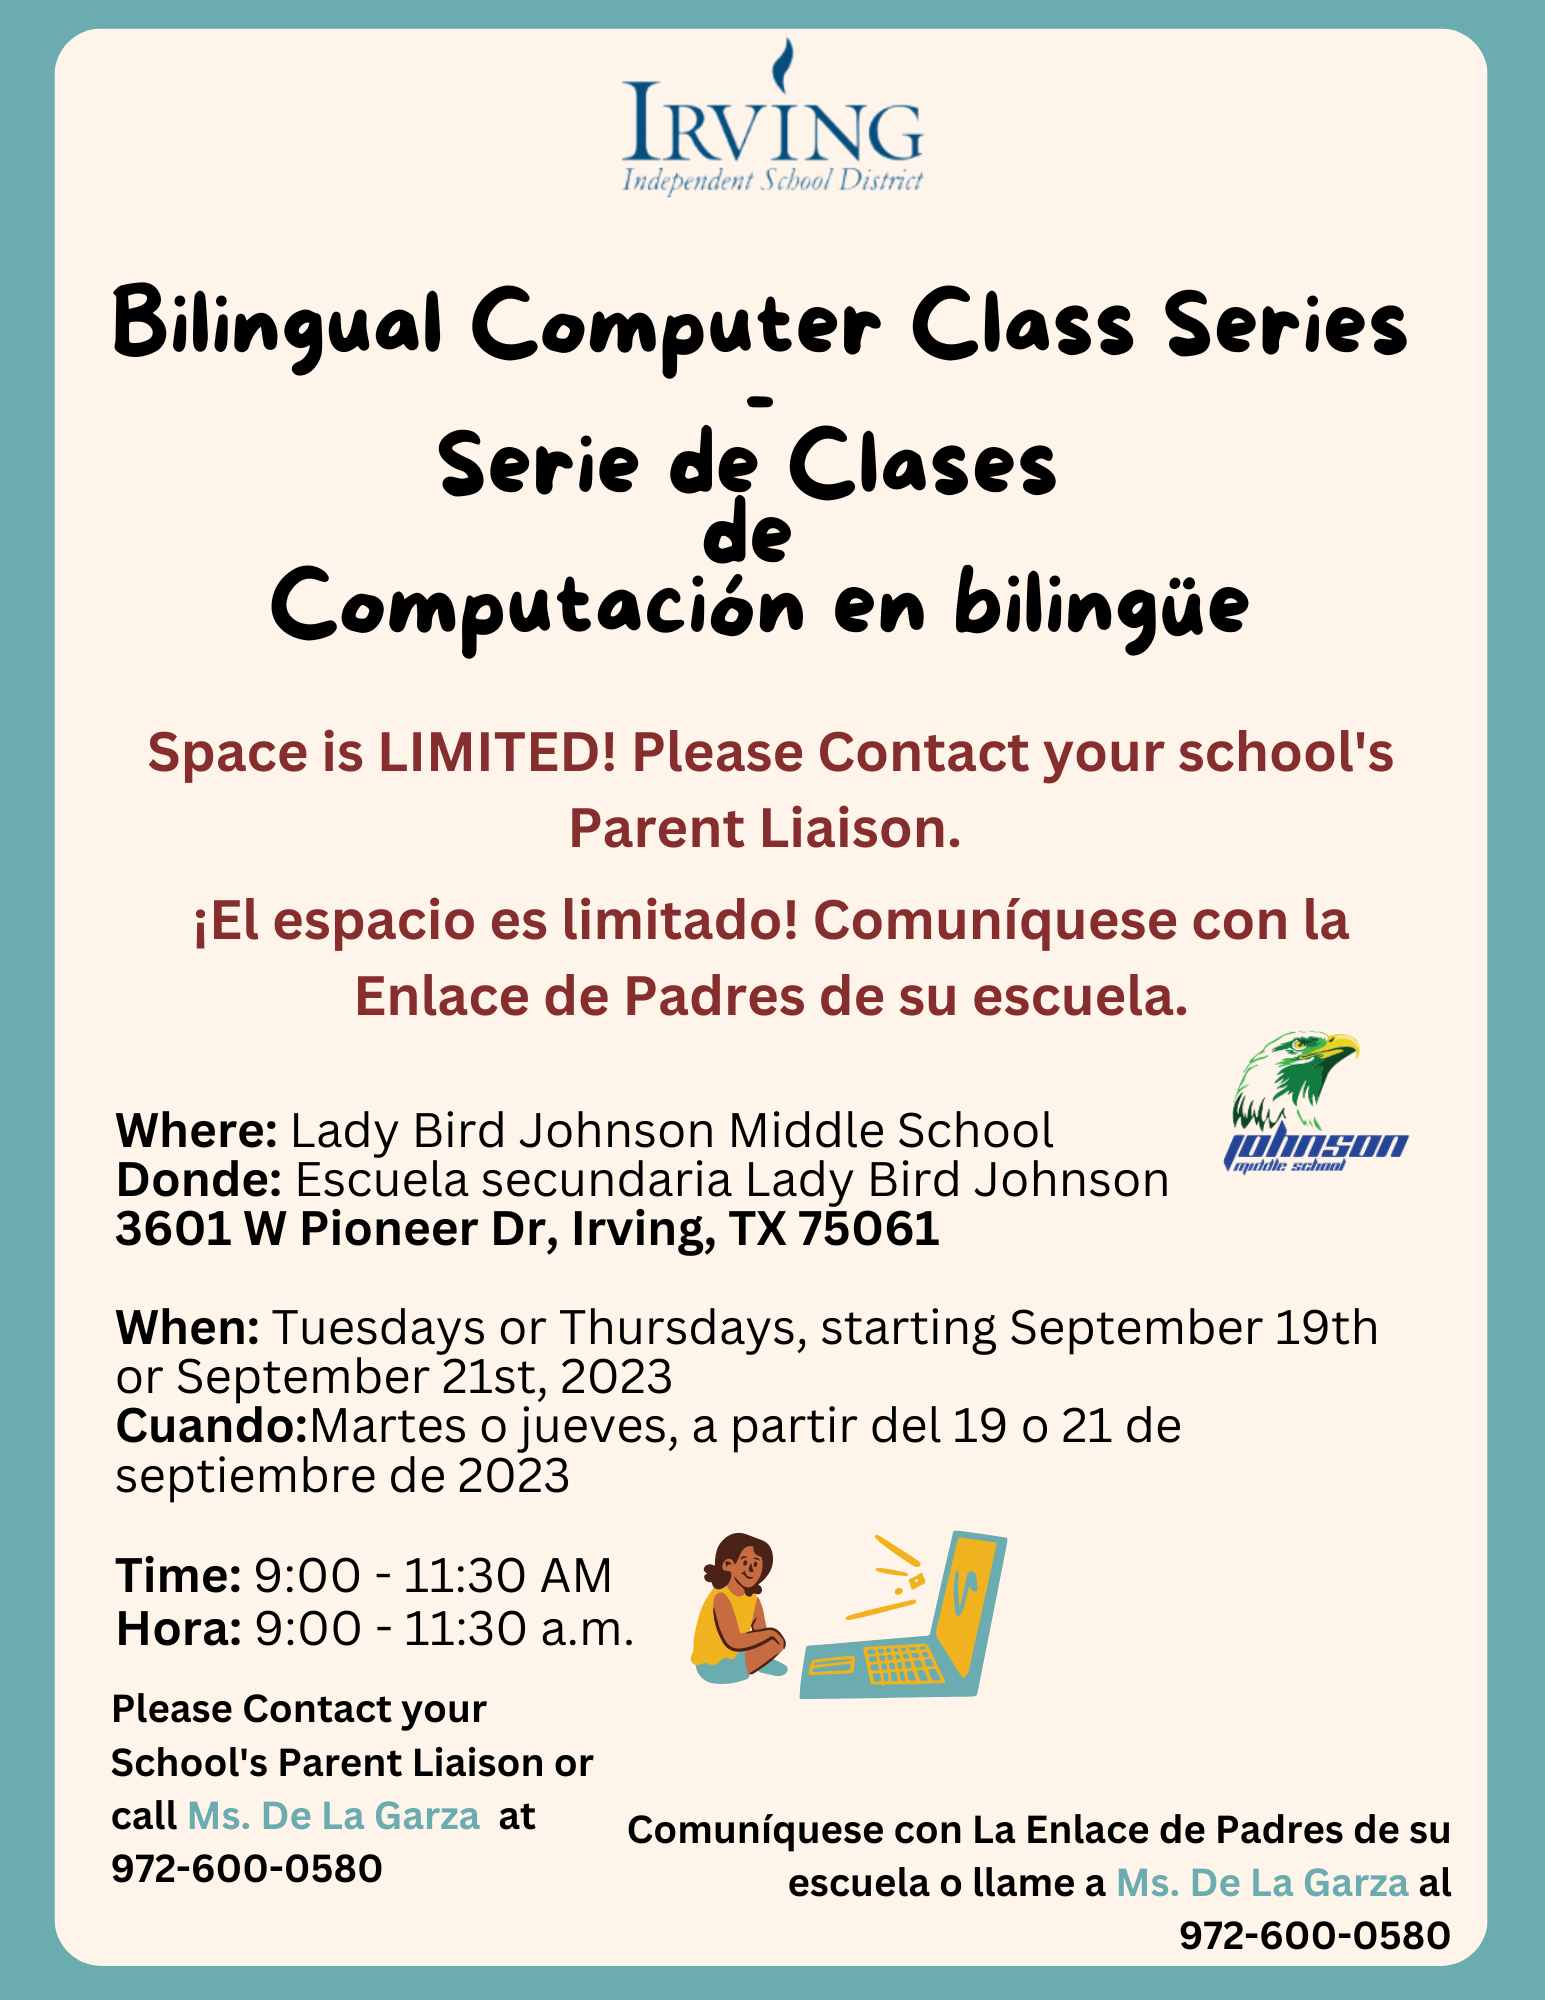 Bilingual Computer Class Series Tuesdays and Thursdays beginning September 19 at 9am